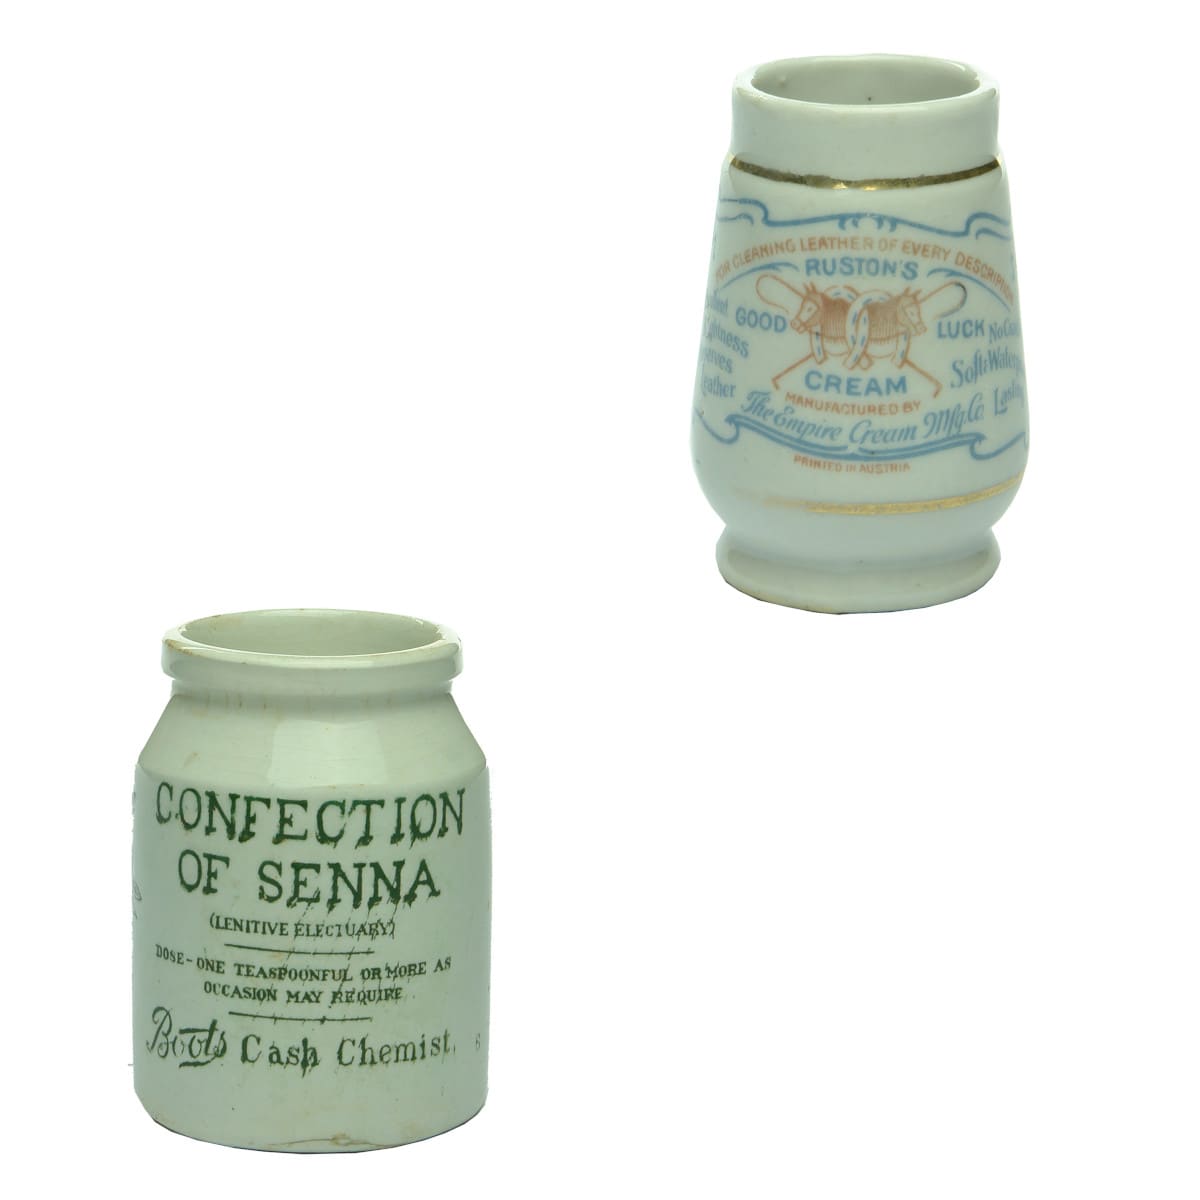 Jars. Boots Confection of Senna; Ruston's Cream, Empire Cream Mfg. Co.